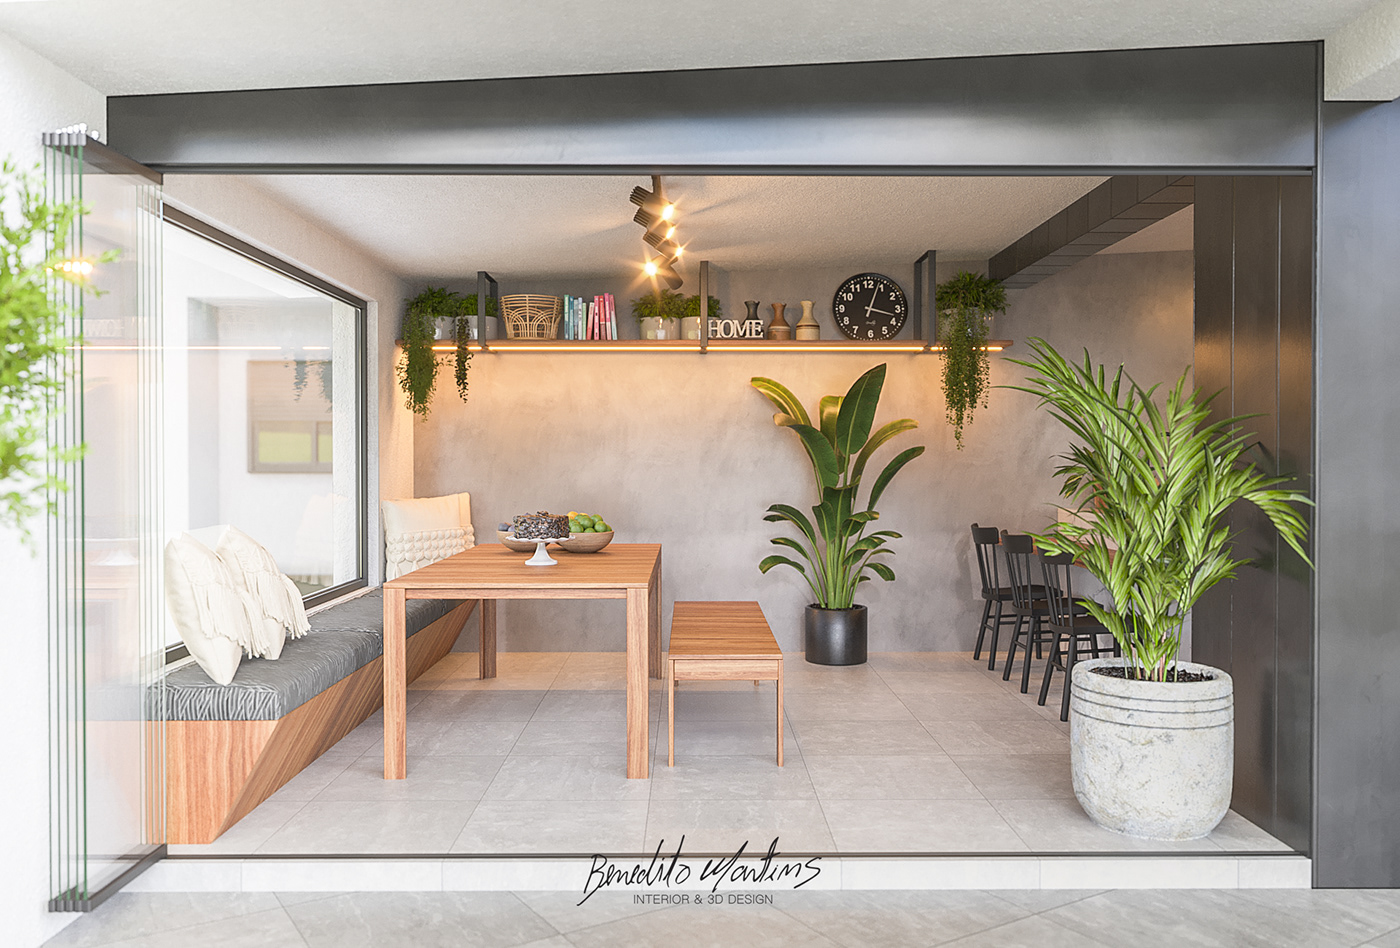 3D BBQ churrasco grill interior design  kitchen Outdoor plants Tropical wood